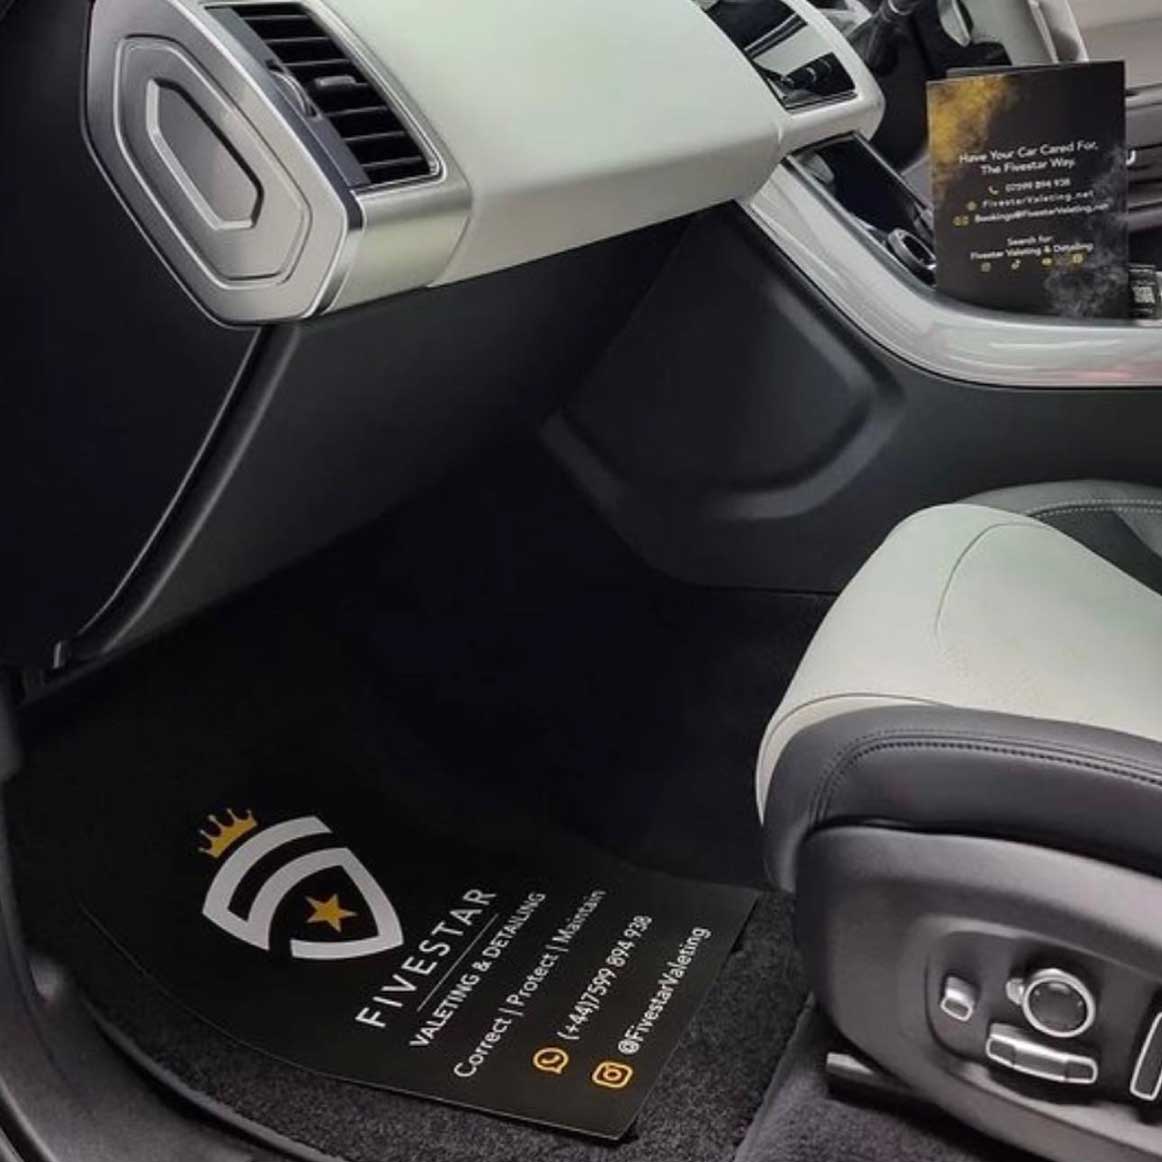 Custom-designed paper floor mat featuring brand logo in a spotless car interior